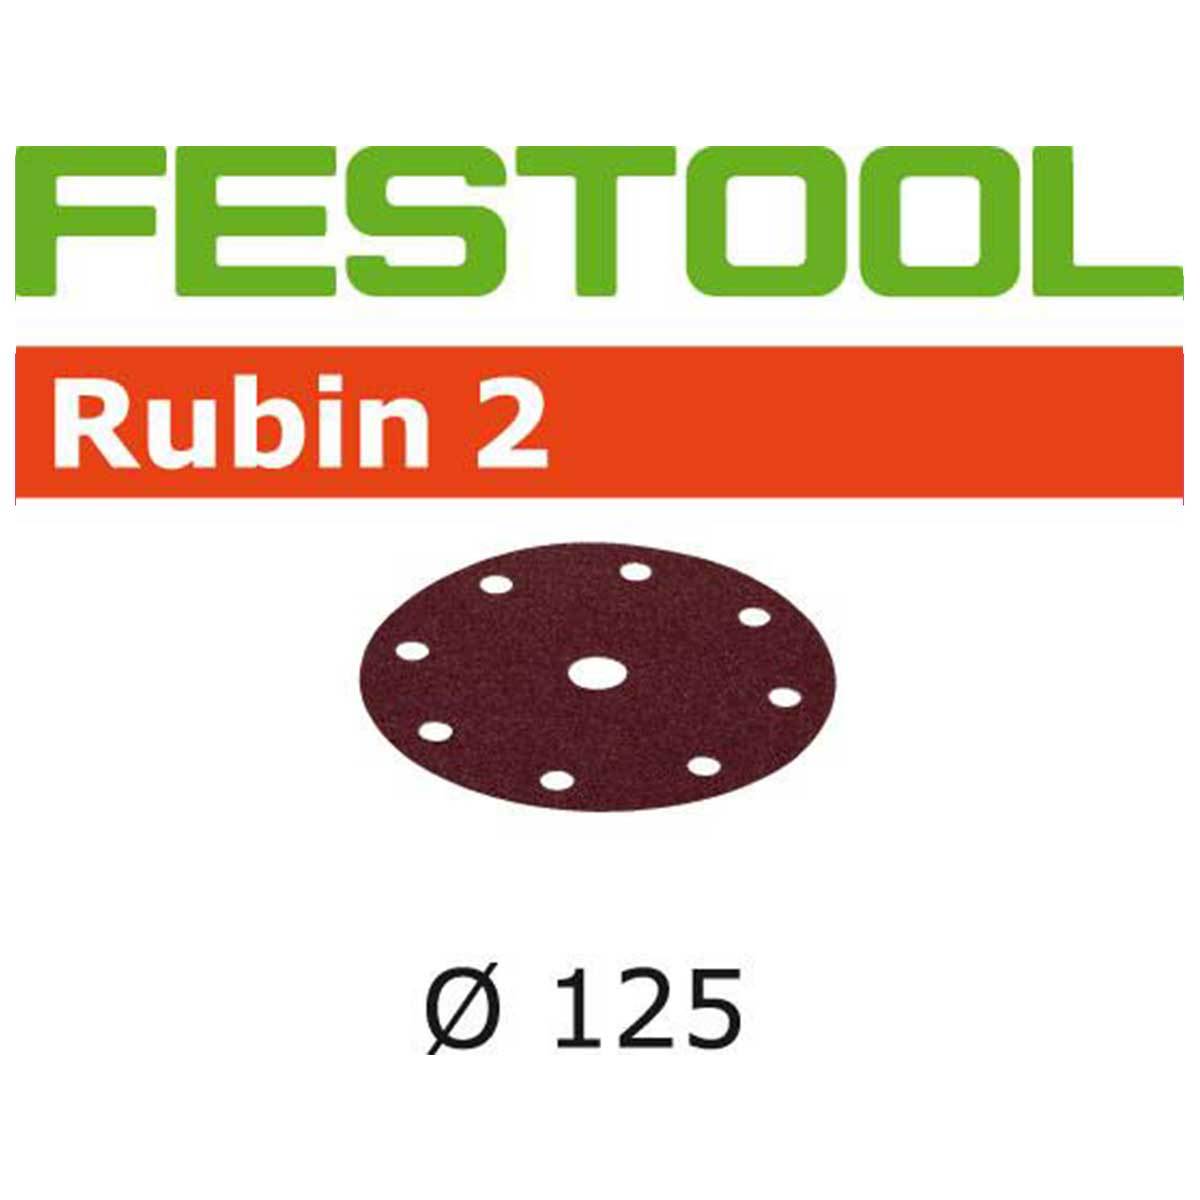 D125mm aluminum oxide Rubin 2 abrasive disc for use with Festool's ETS 125, ETSC 125, ETS EC 125, and RO 125 sanders.